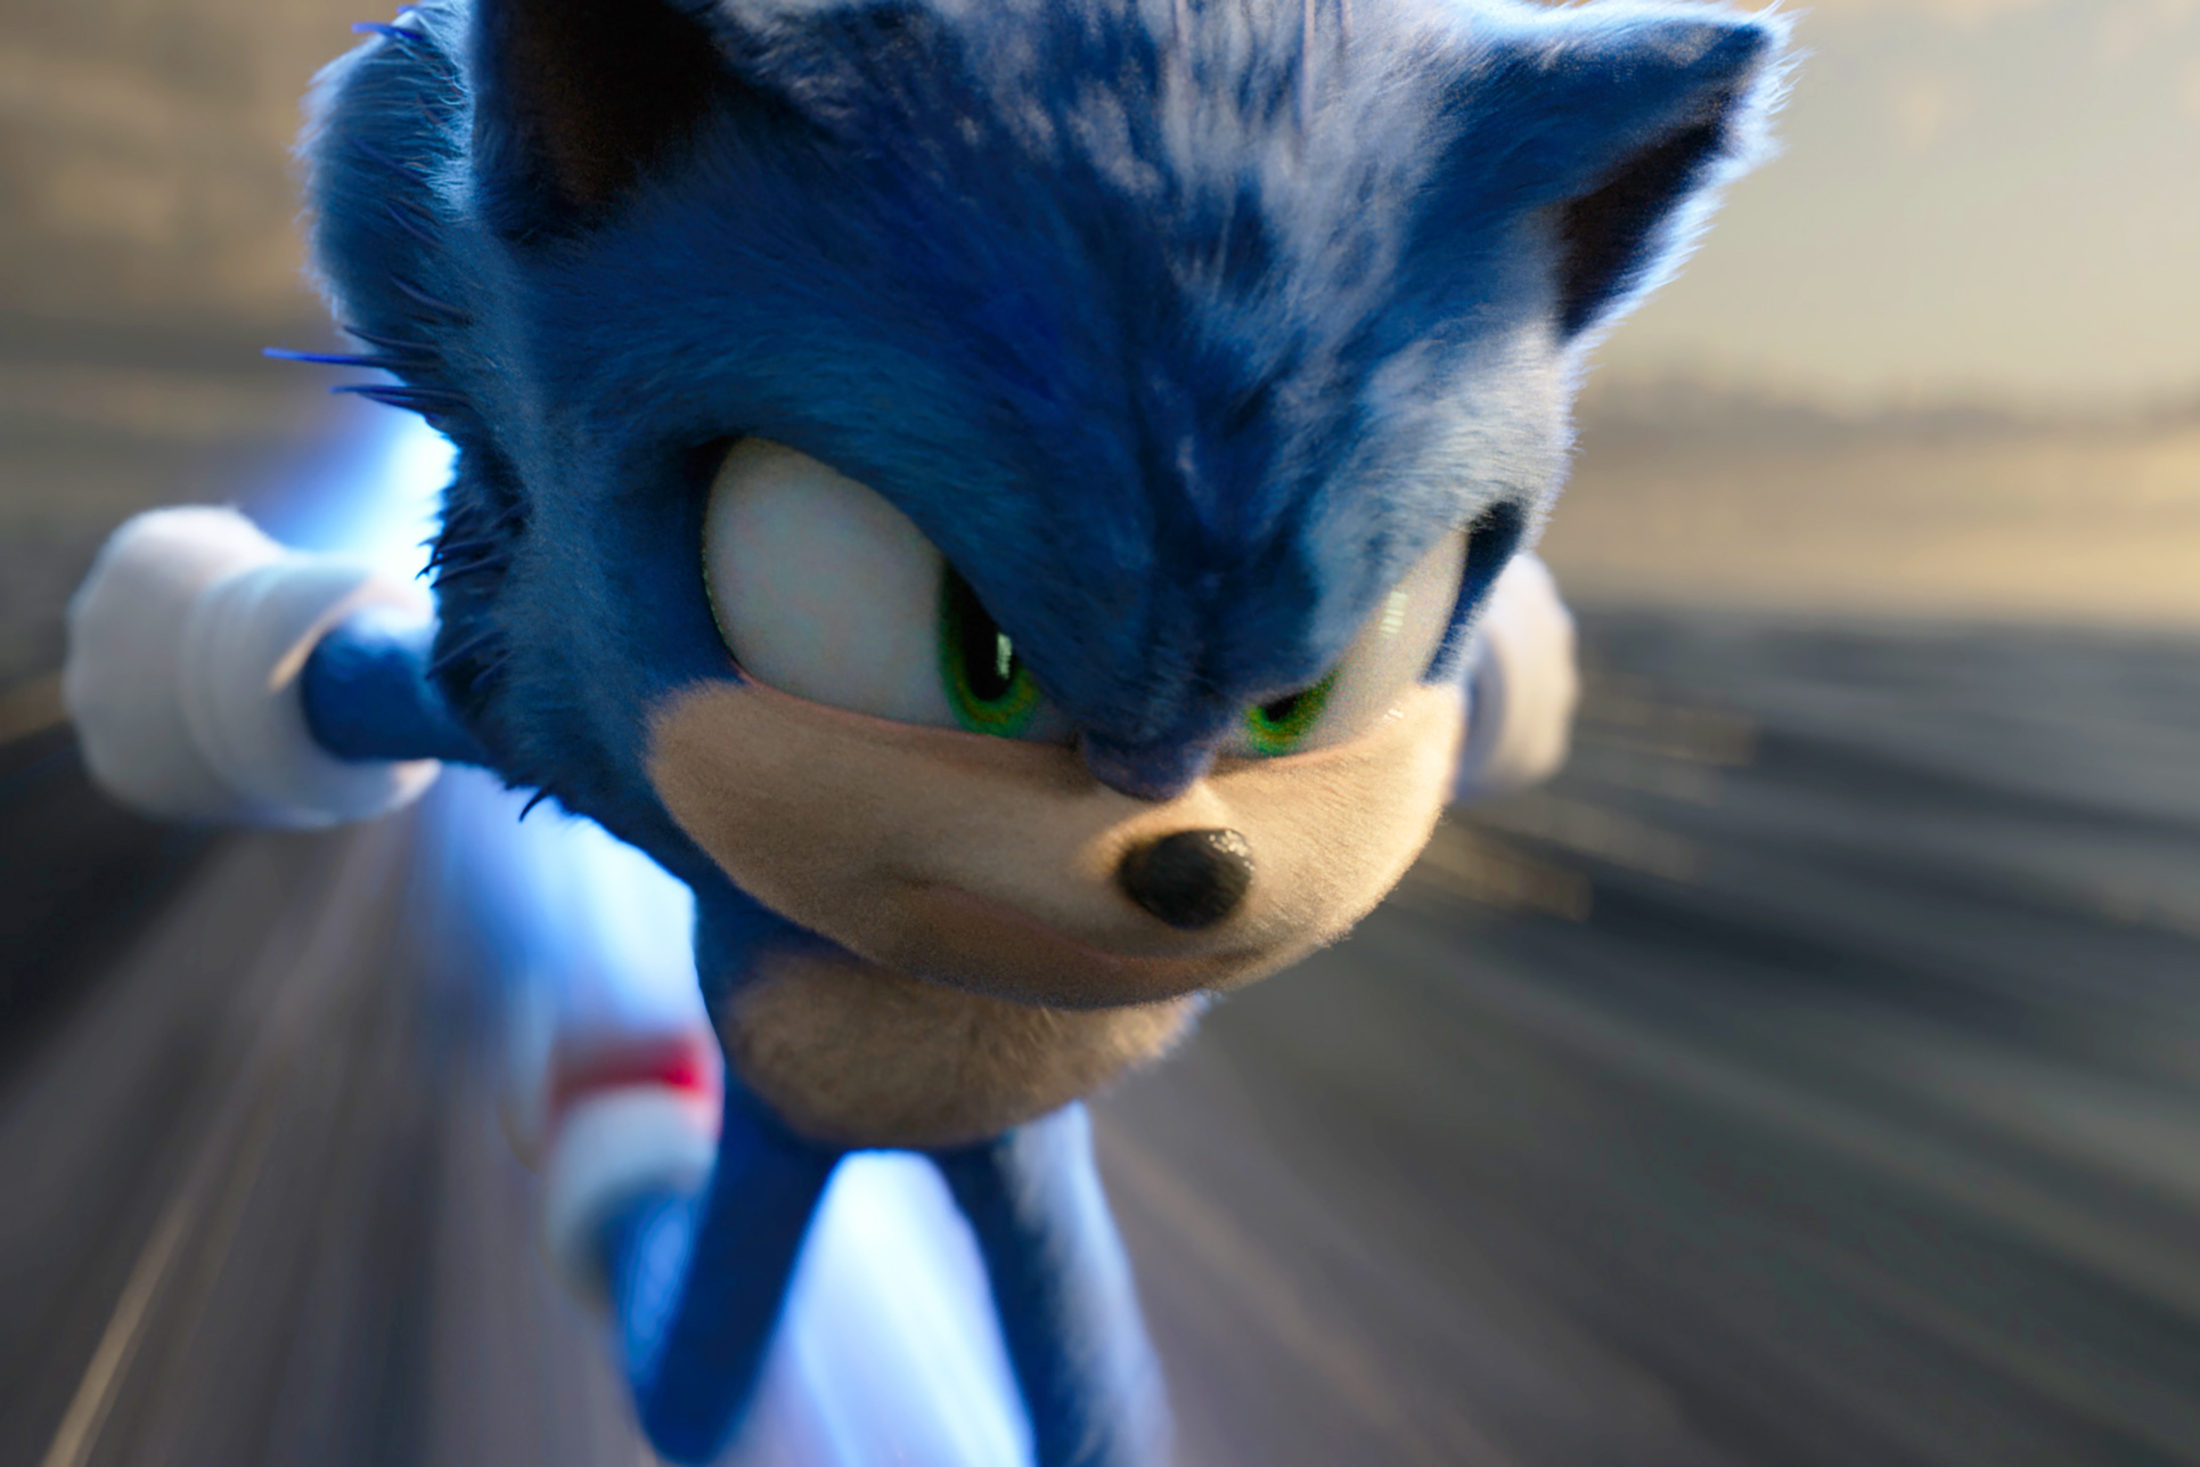 Sonic The Hedgehog 2 Beats Original Movie's Global Box Office Record